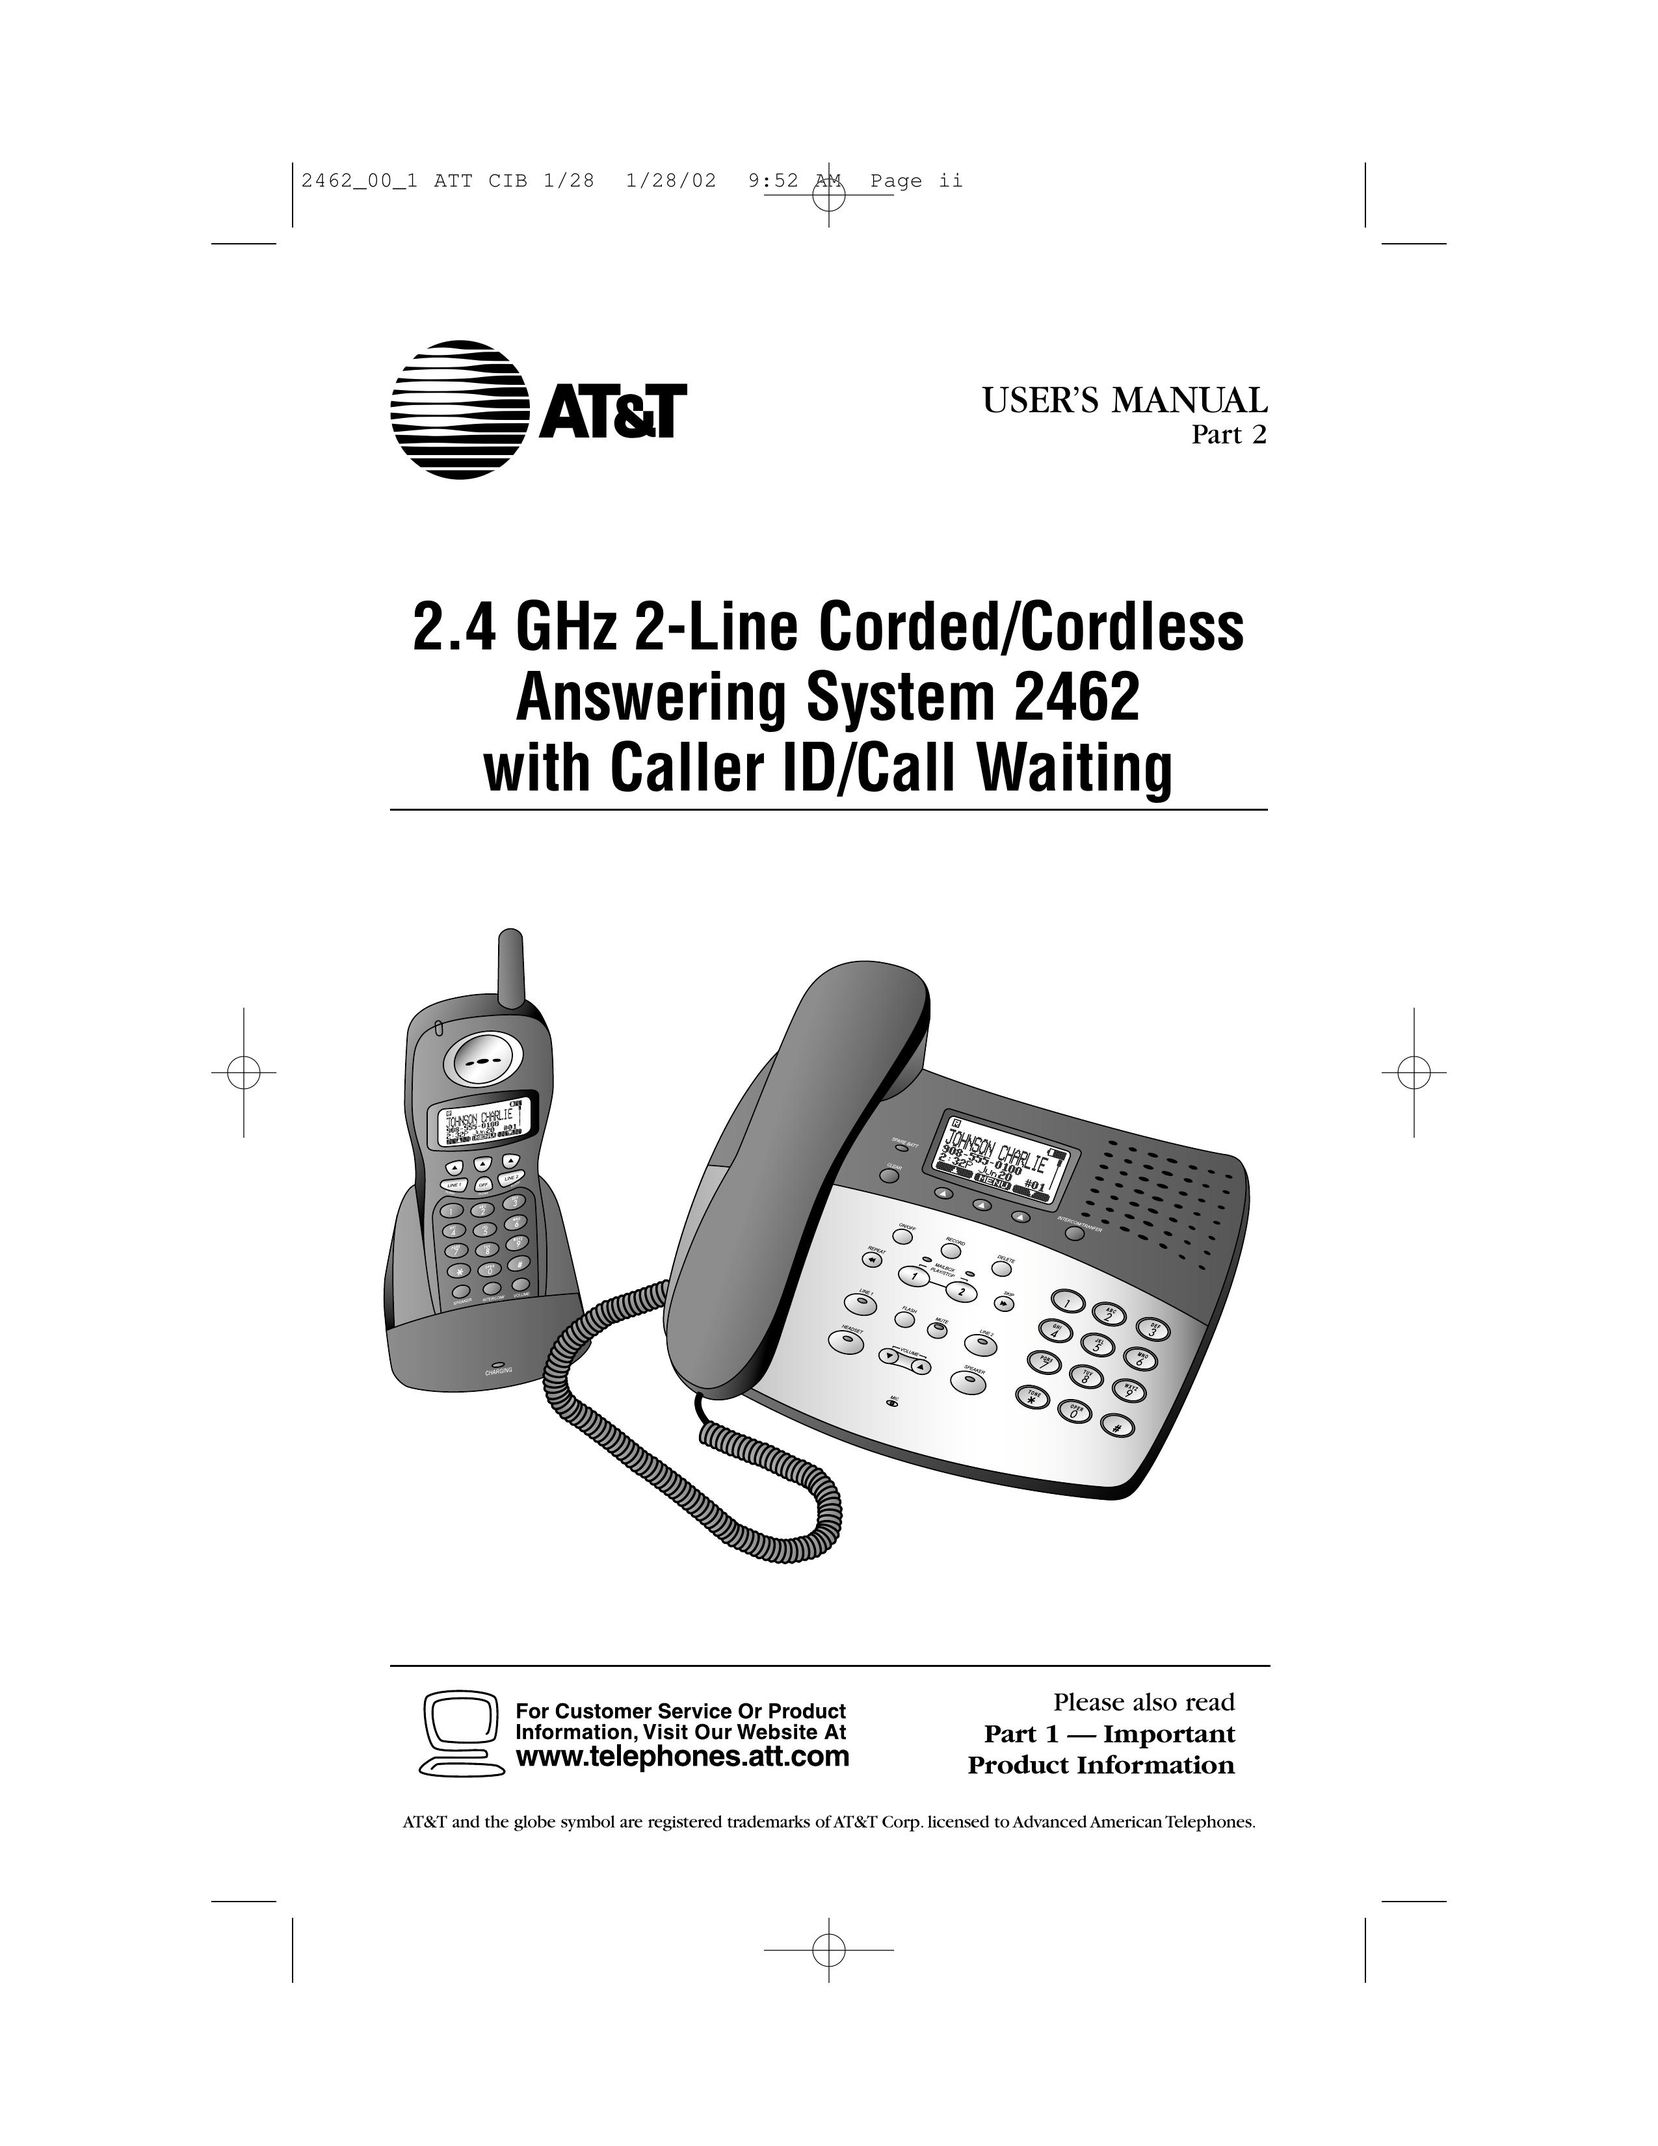 AT&T 2462 Answering Machine User Manual